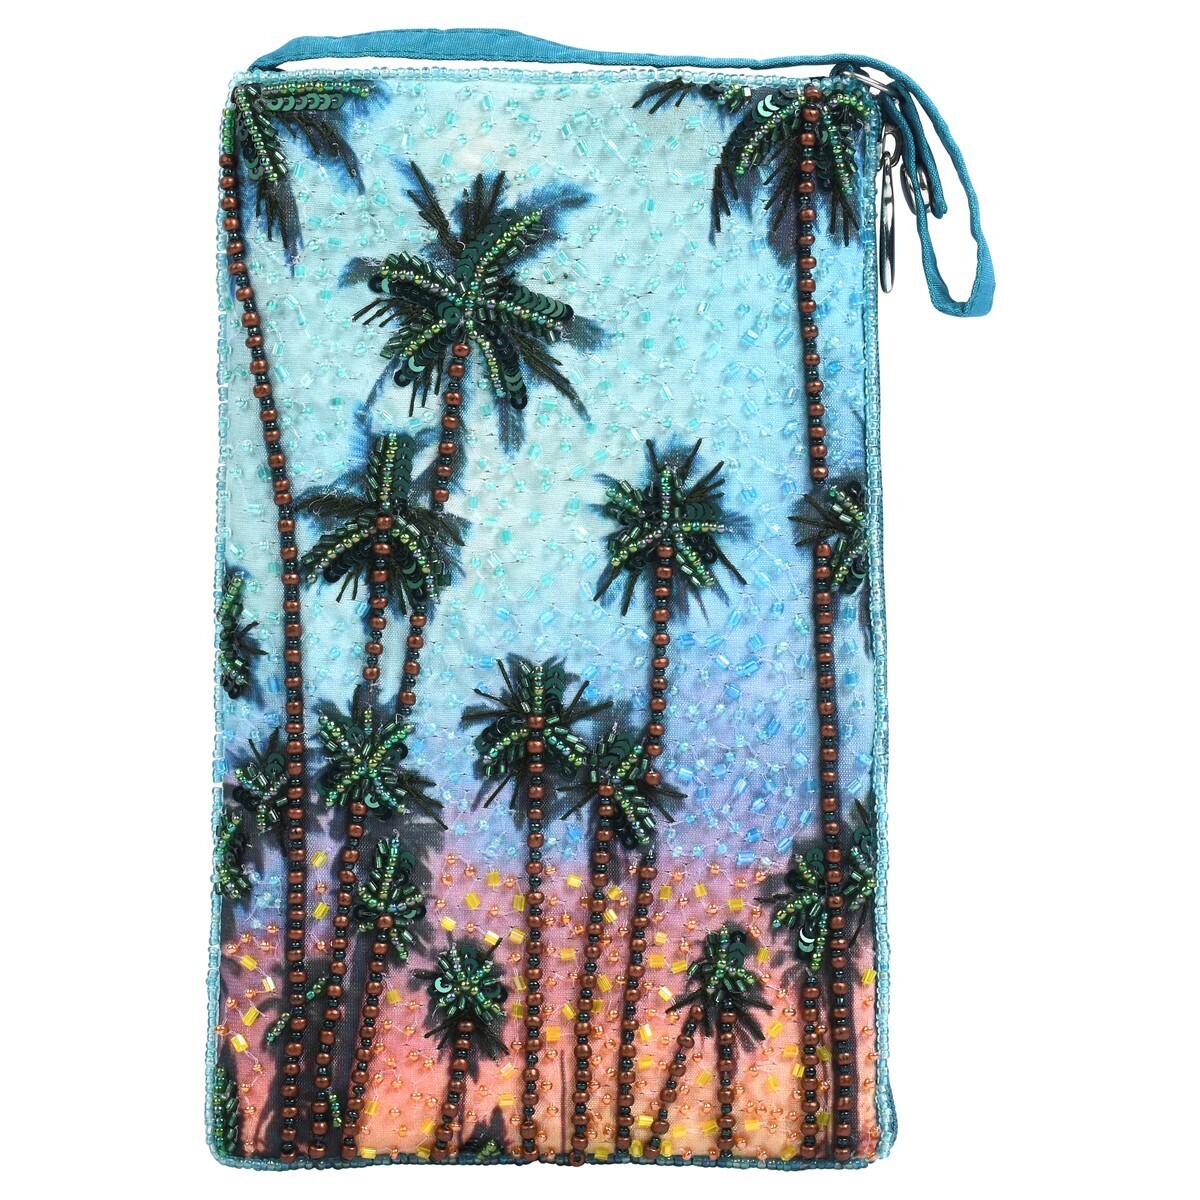 Sunset Palm Club Bag